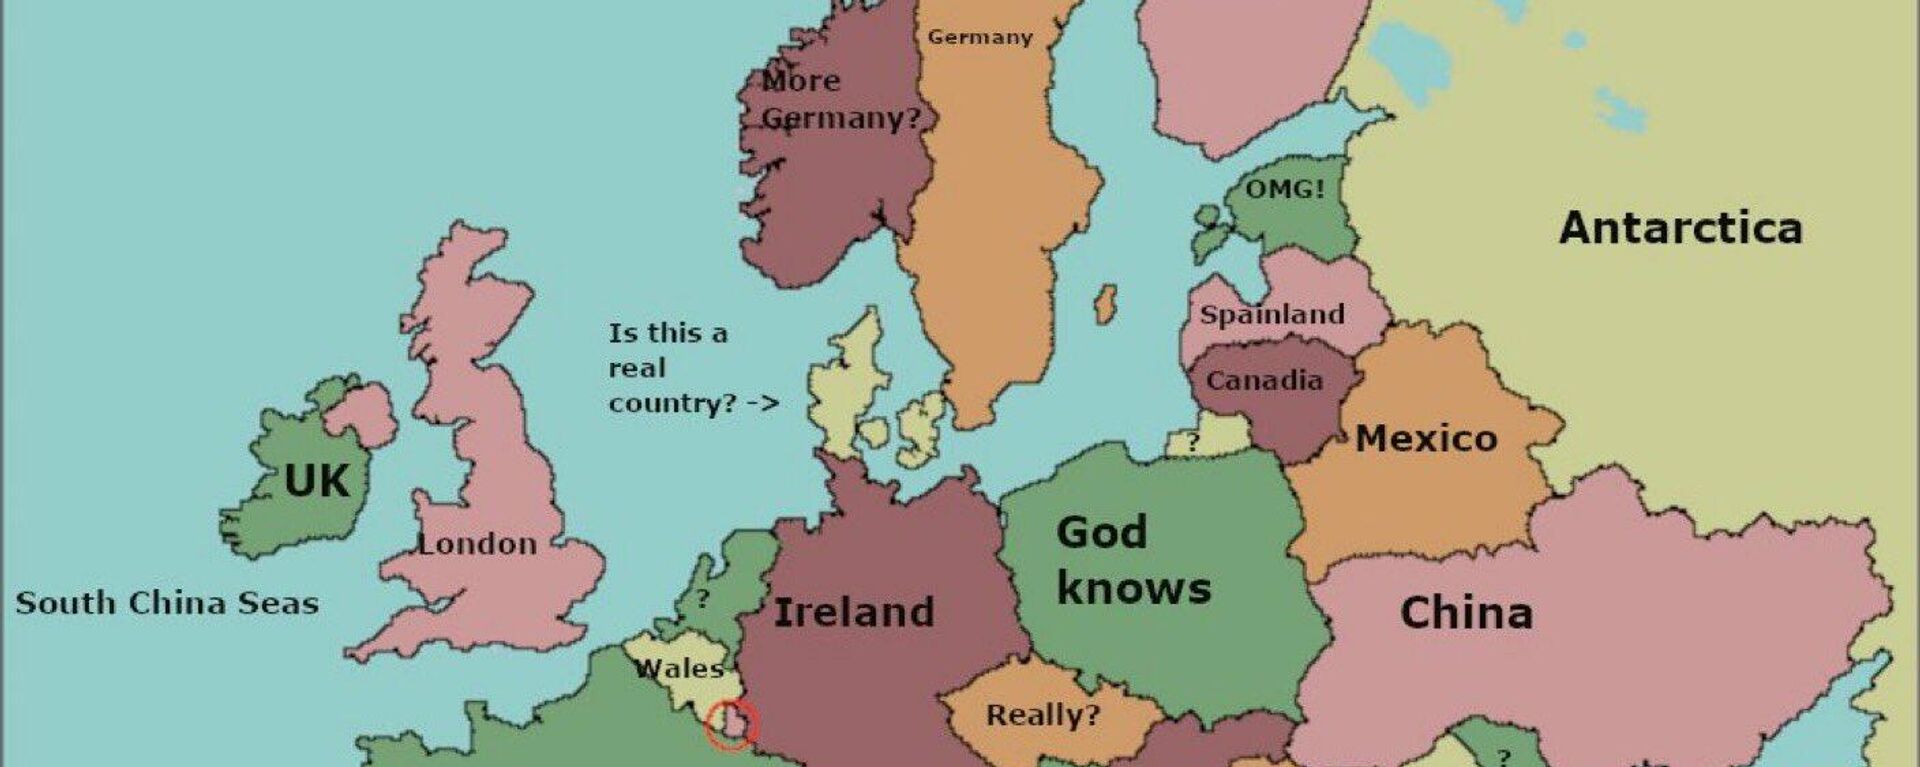 'Geography with Liz Truss' map from Twitter. - Sputnik International, 1920, 11.02.2022